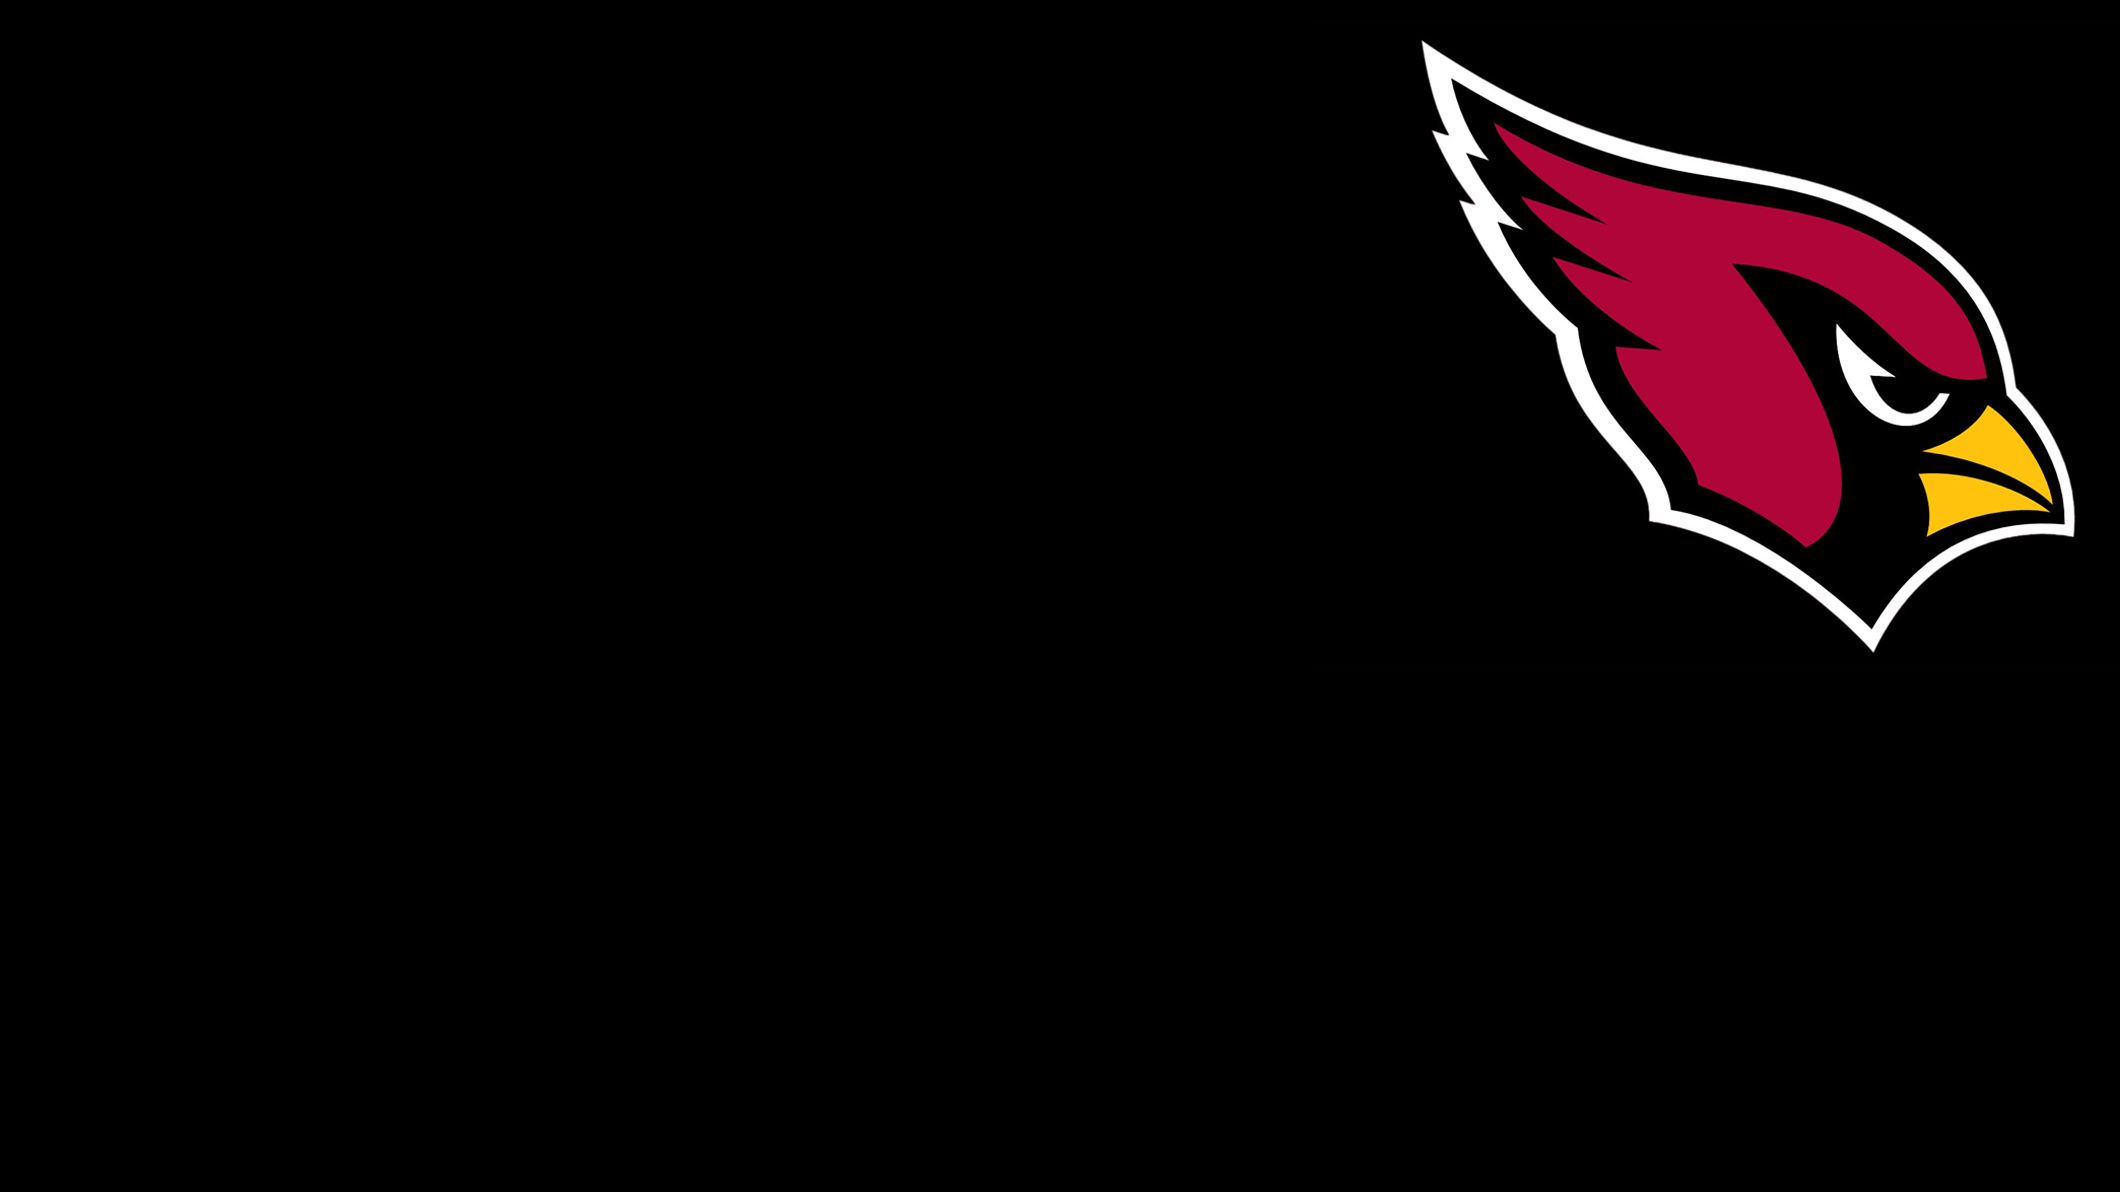 Arizona cardinals logo 7 wallpaper, download free arizona